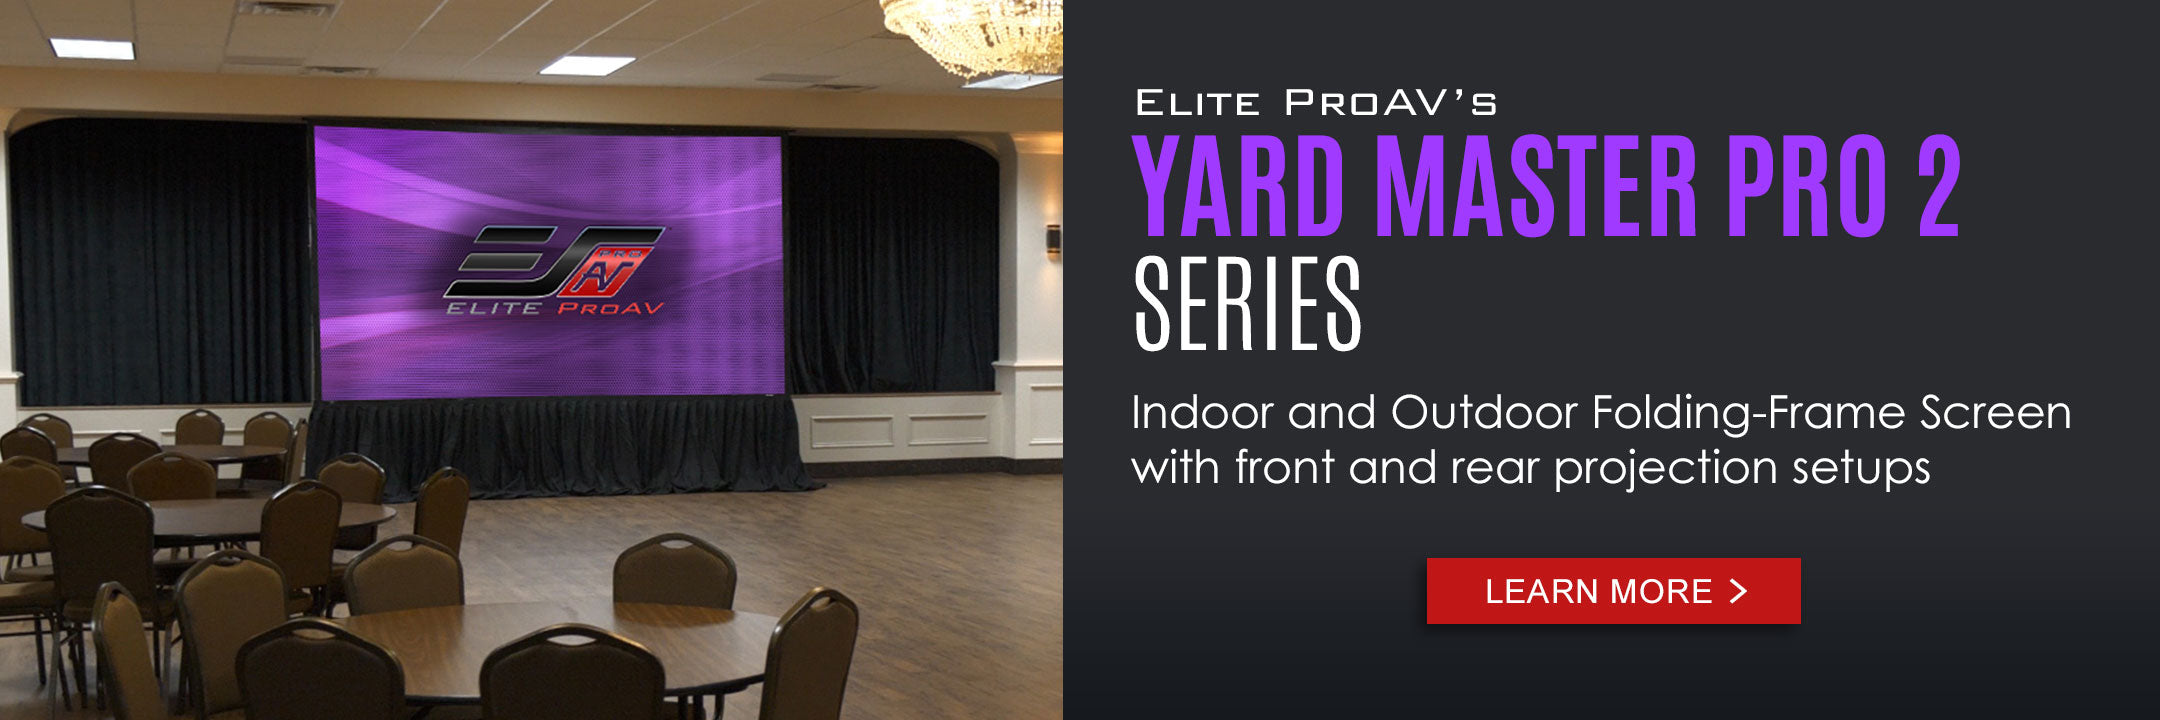 Yard Master Pro 2